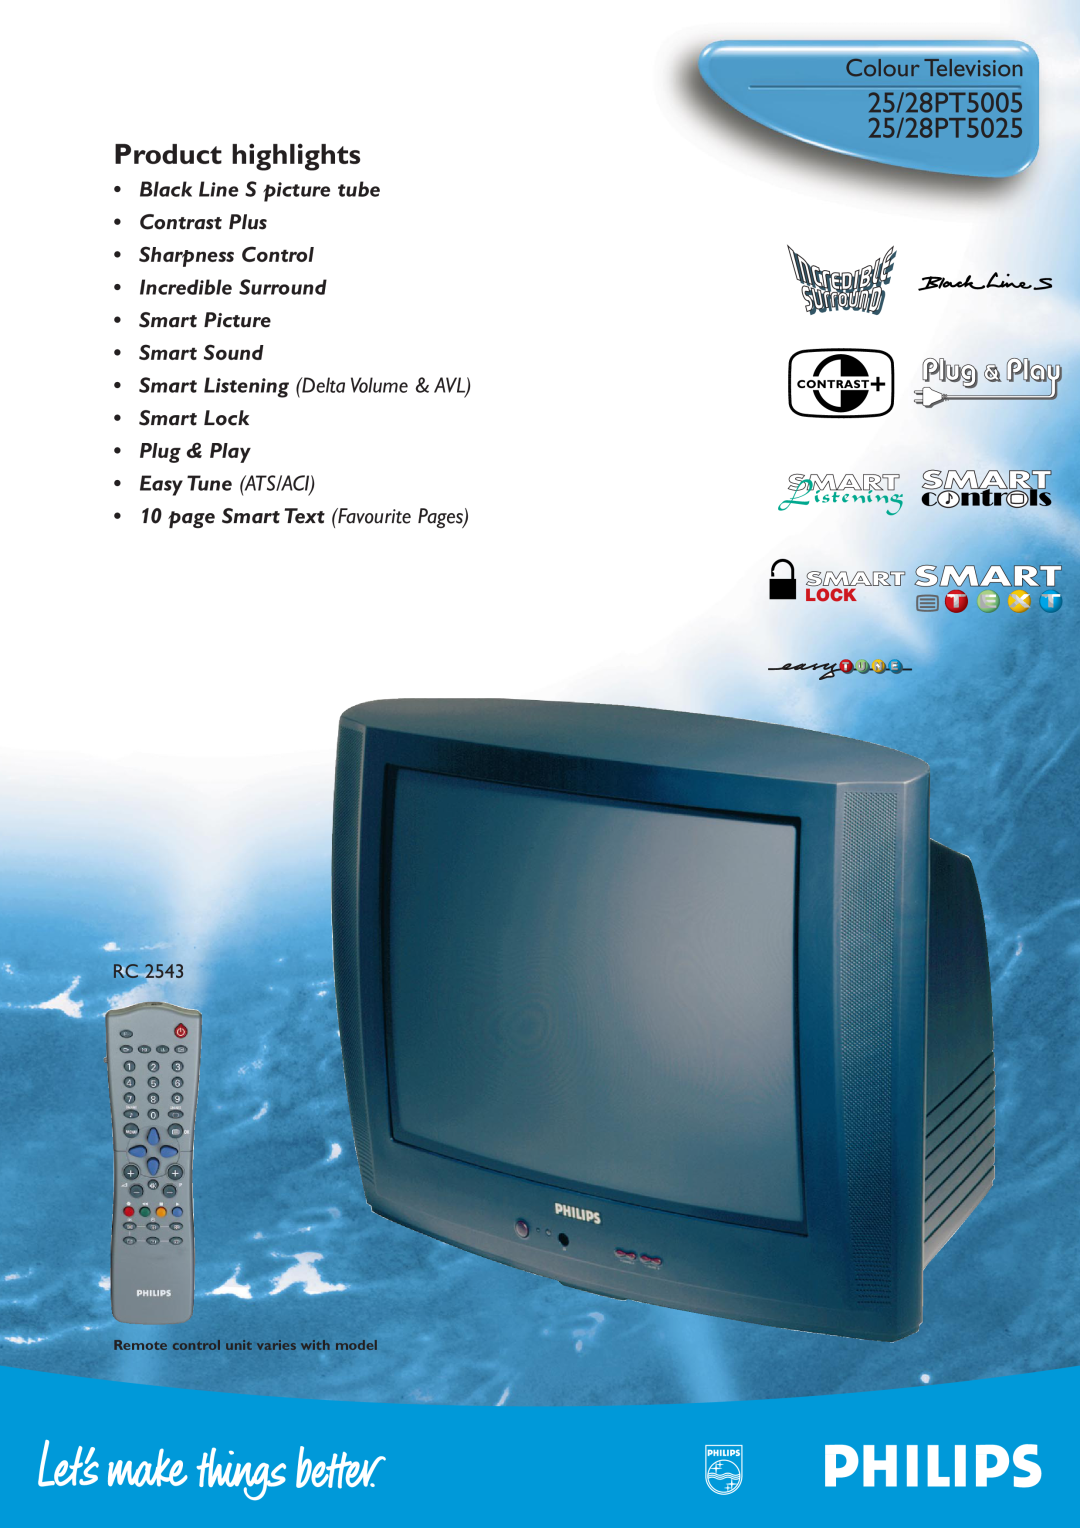 Philips manual 25/28PT5005 25/28PT5025, Colour Television, Product highlights, Smart Listening Delta Volume & AVL 